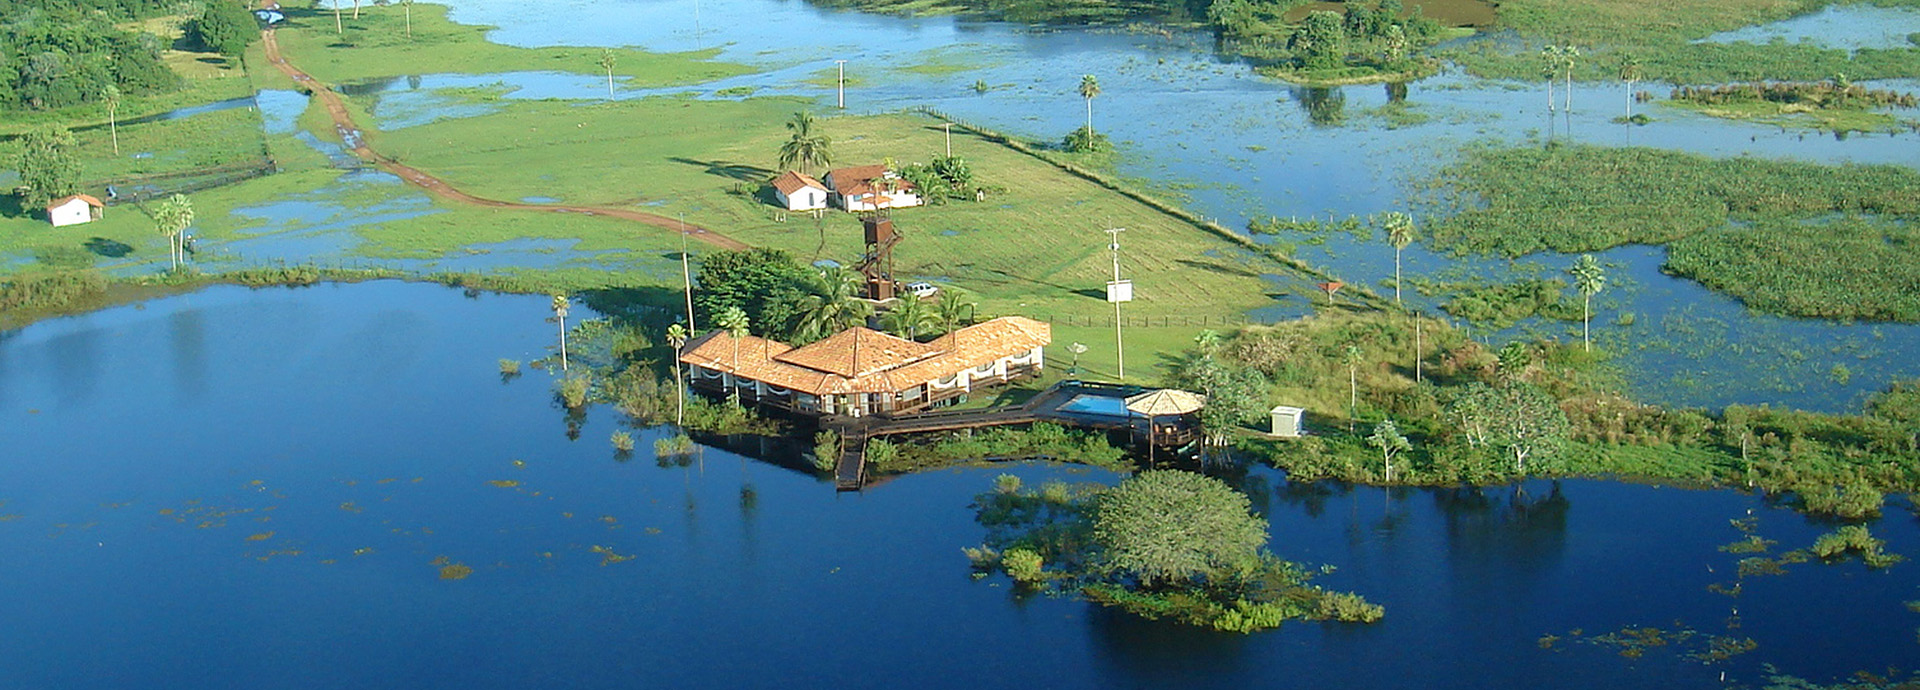 Caiman Ecological Refuge Baiazinha - wilderness in Pantanal brazil